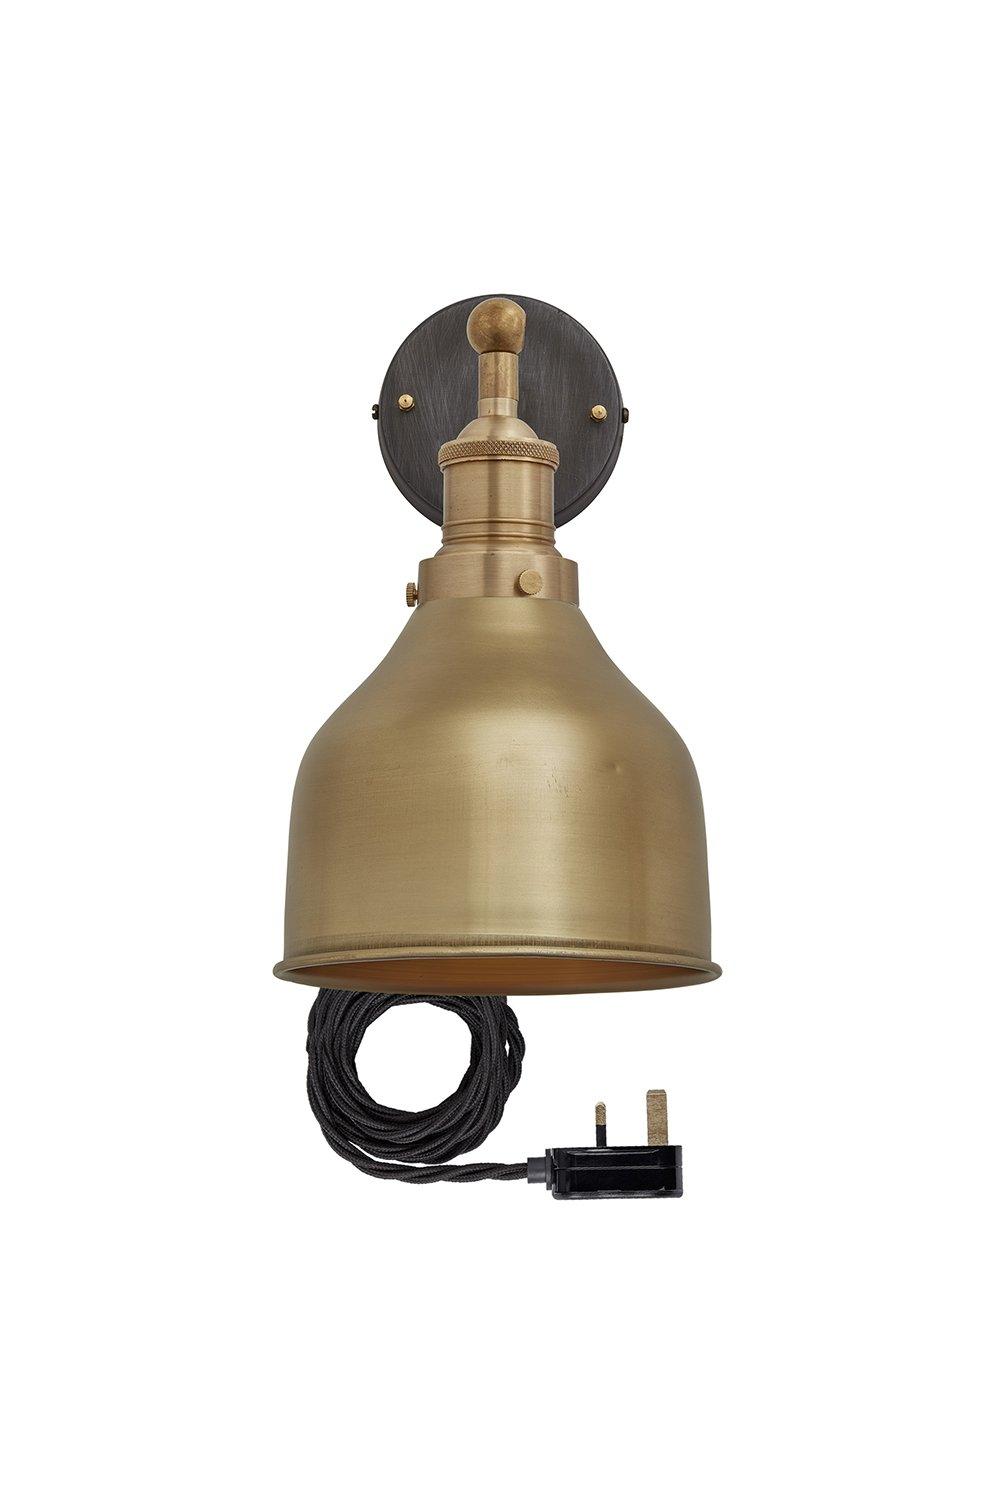 Brooklyn Cone Wall Light, 7 Inch, Brass, Brass Holder With Plug